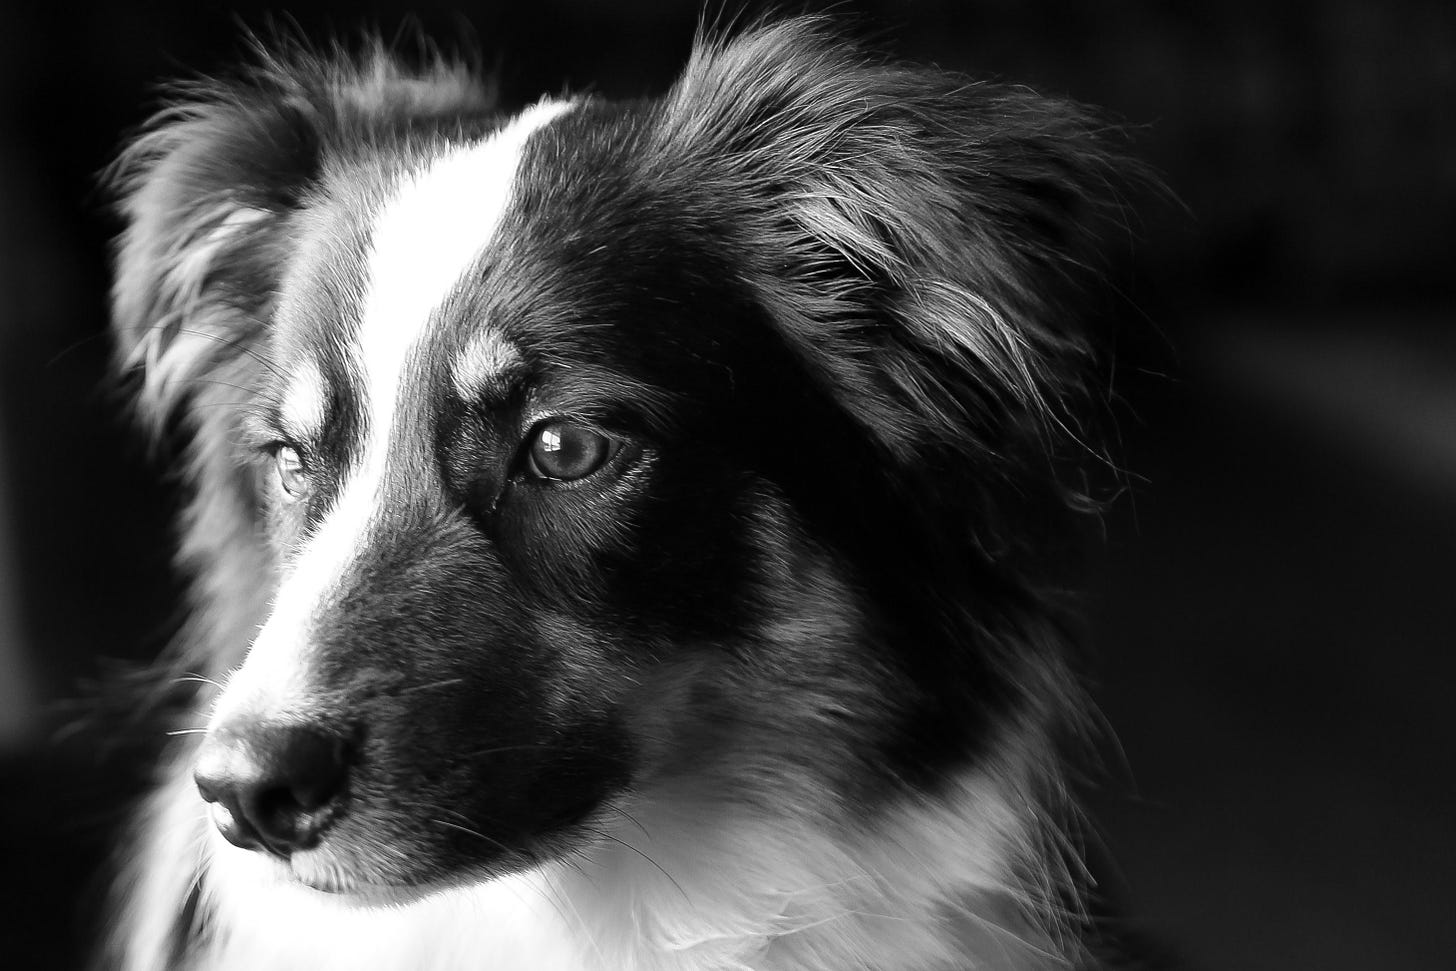 Black and White Dog in Black and White | Black and white dog, Real dog, Dogs